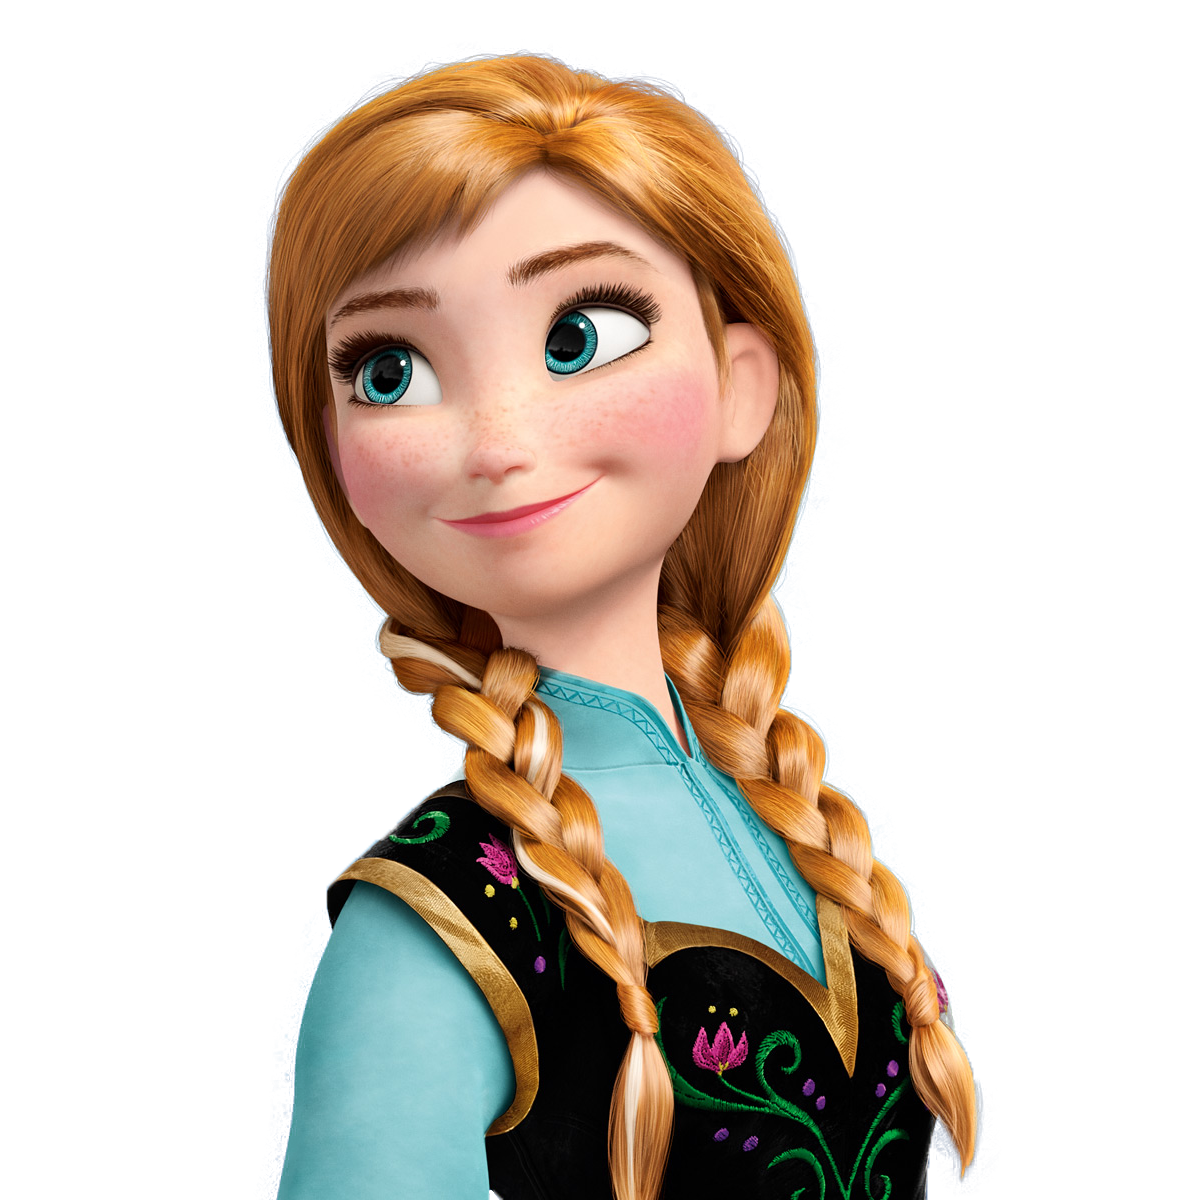 Free Disney Frozen Png, Download Free Disney Frozen Png png images